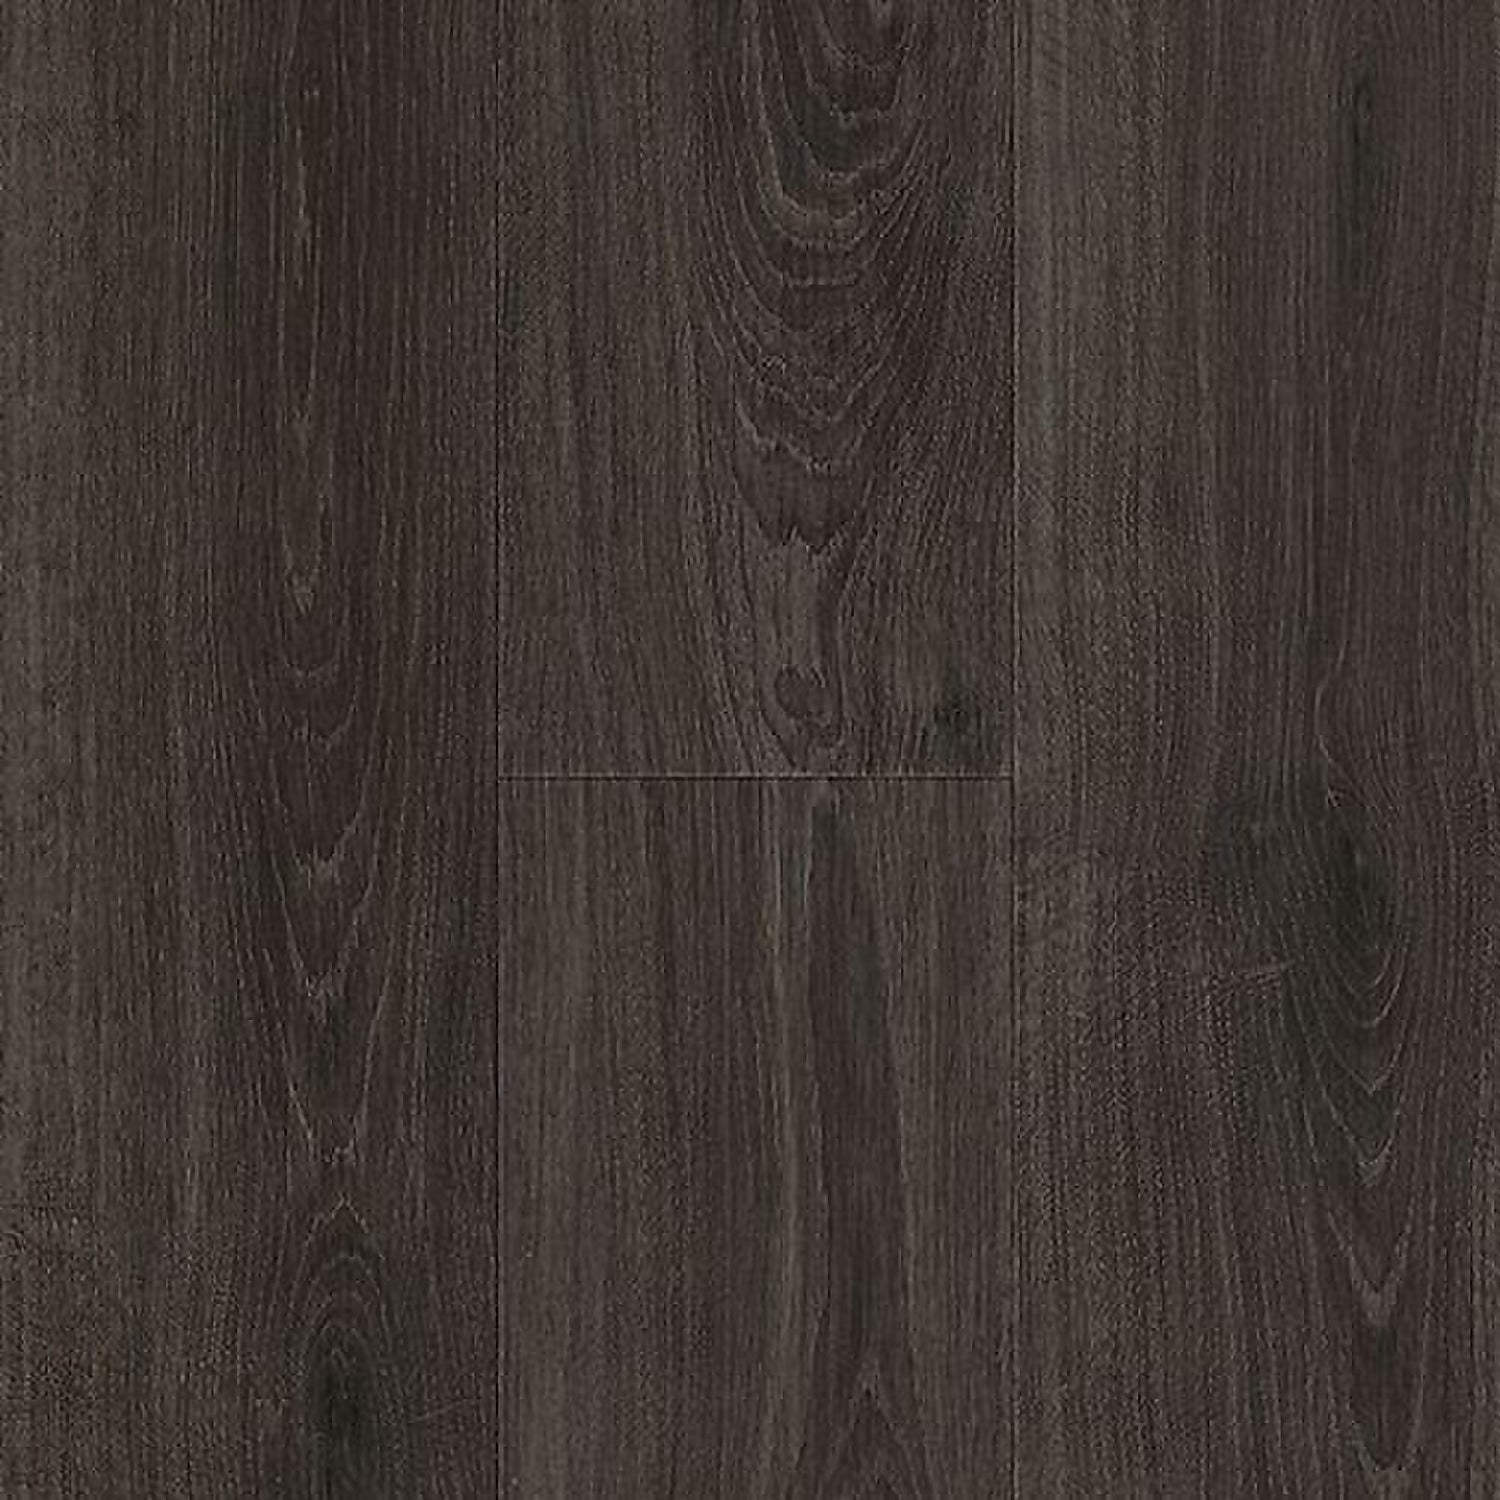 Anthracite oak wood effect laminate flooring